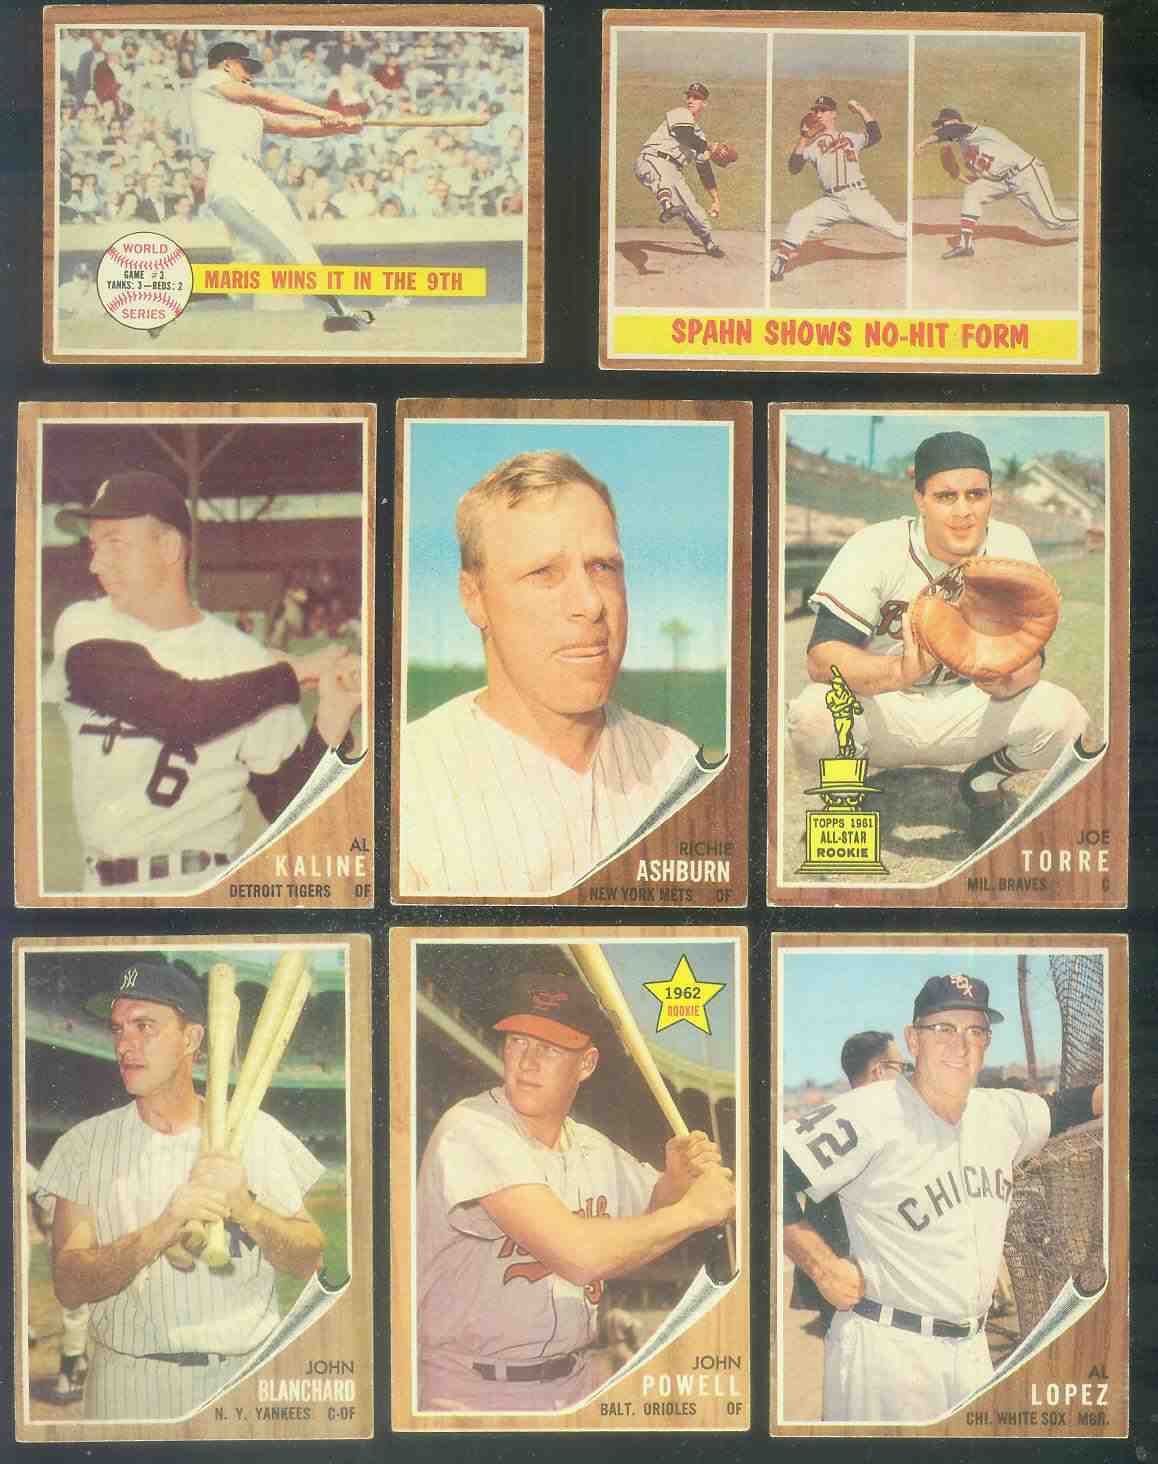 1962 Topps #150 Al Kaline [VAR:Green Tint] (Tigers) Baseball cards value